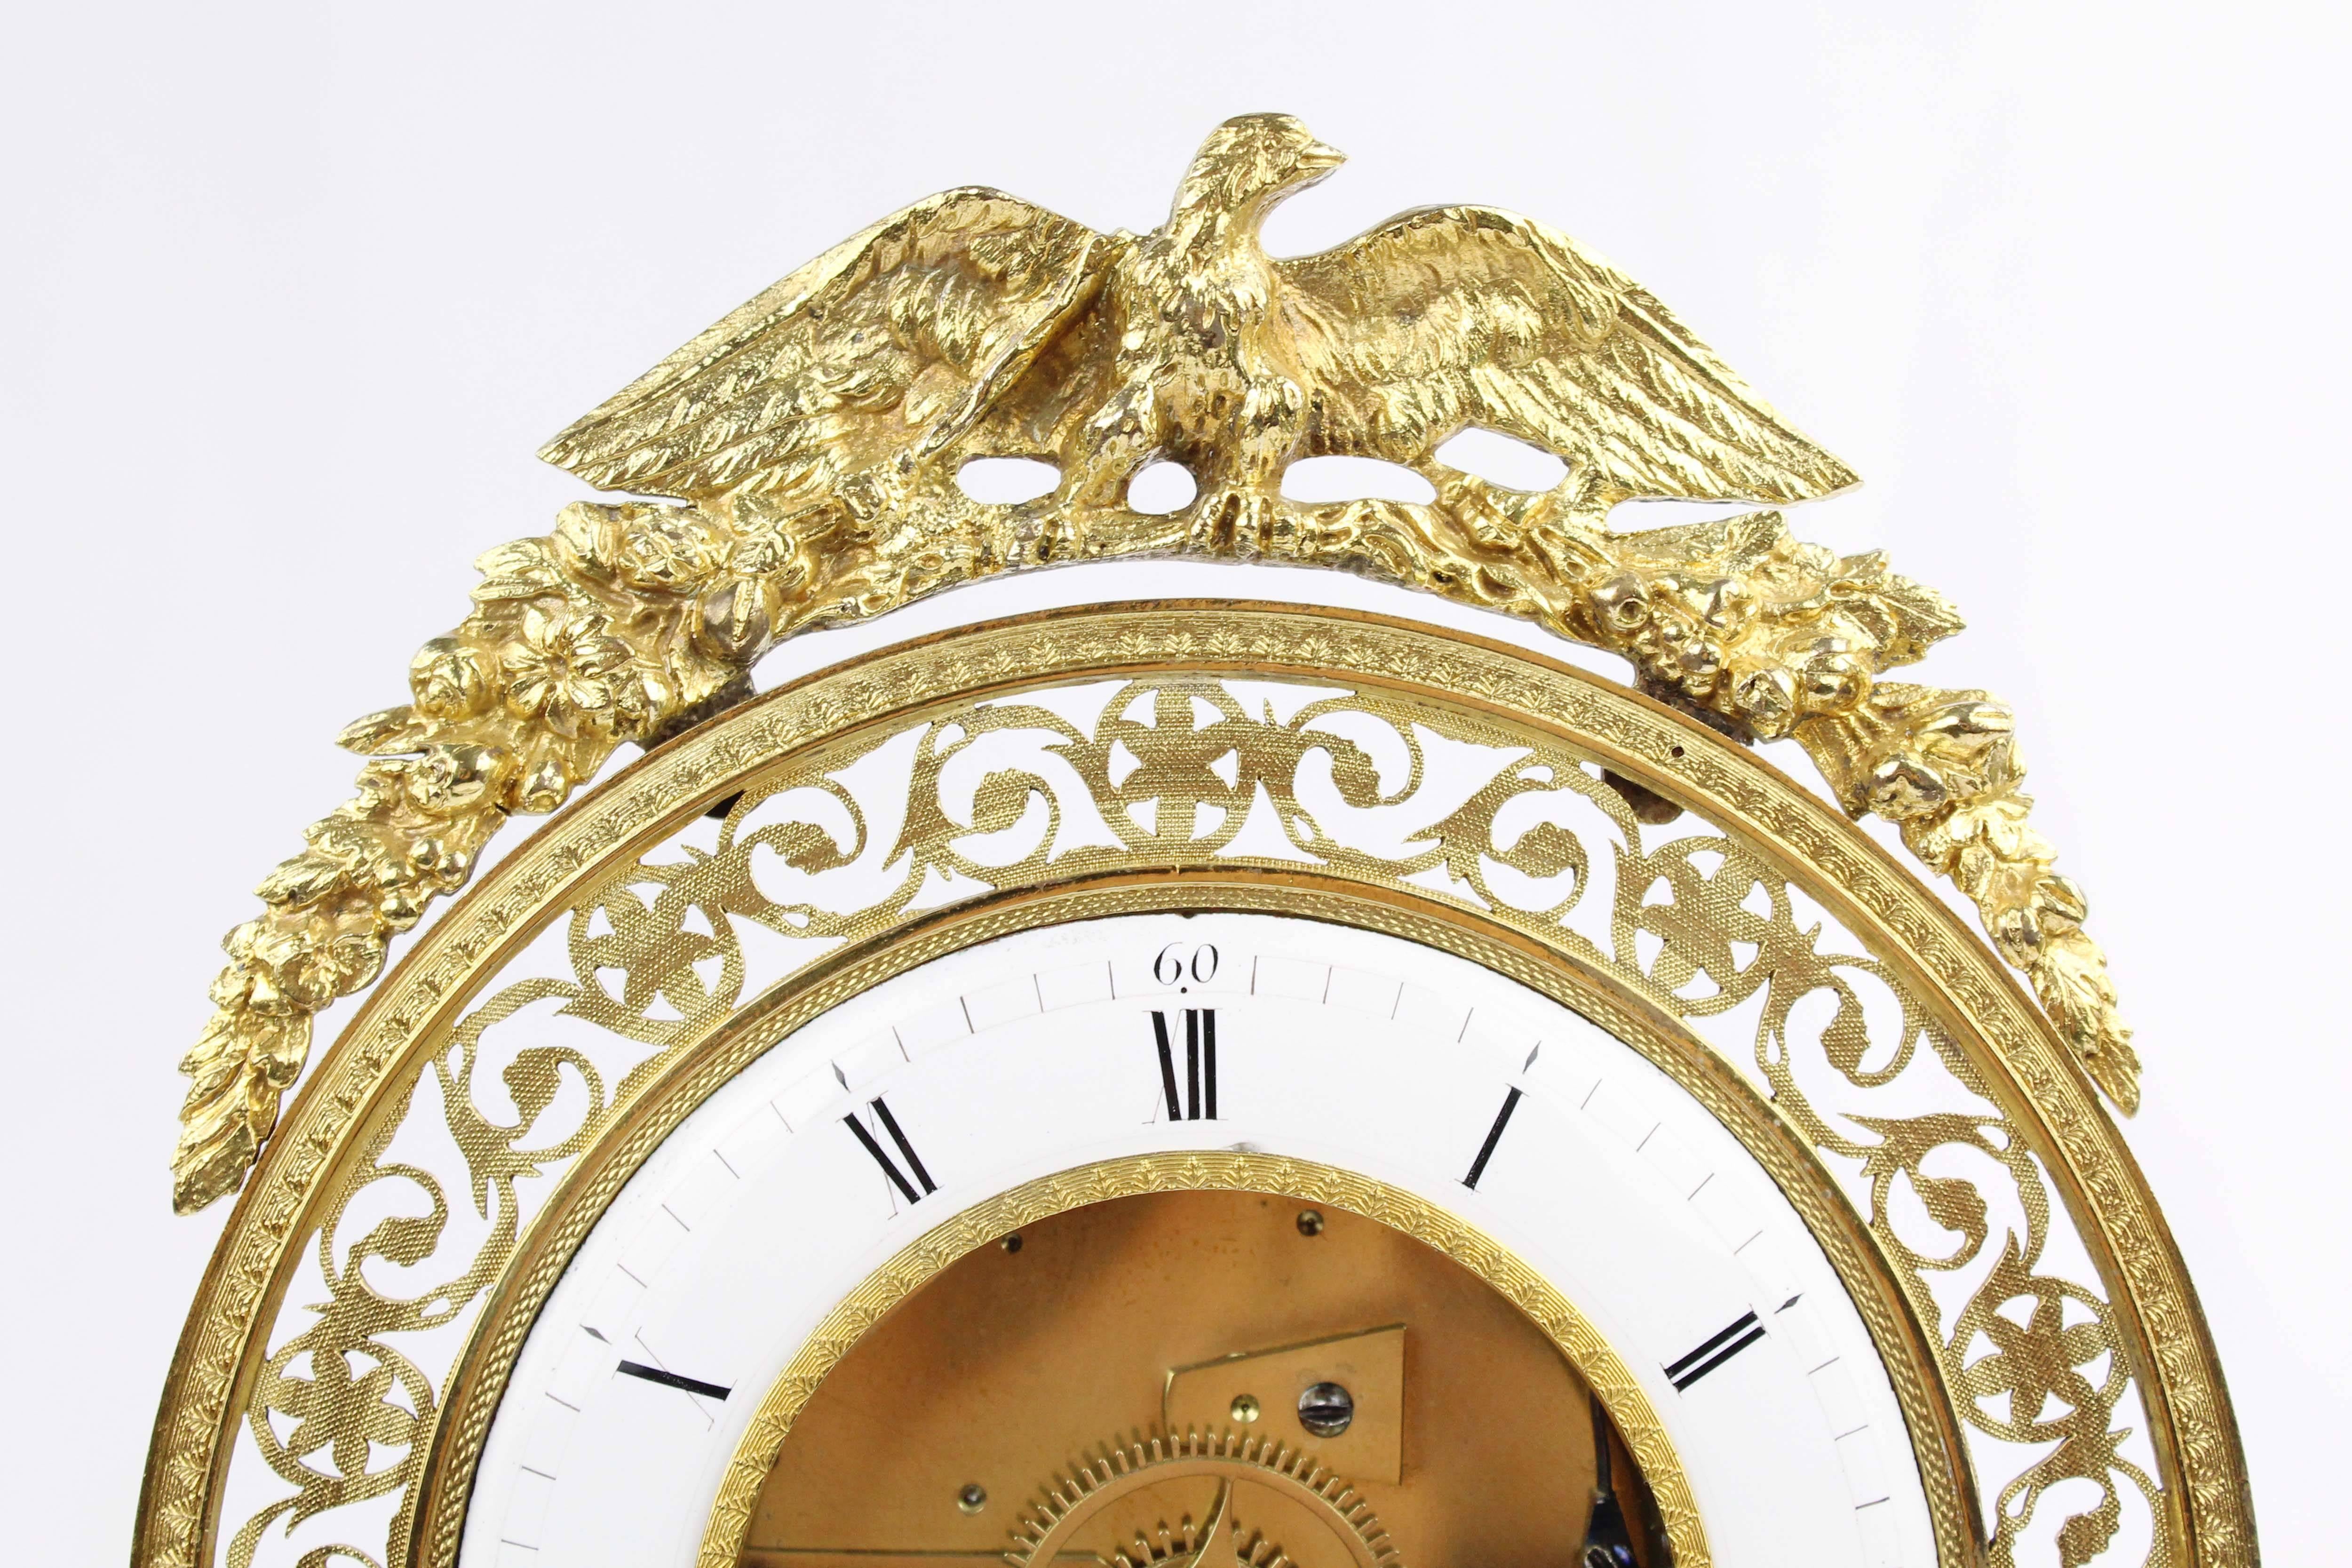 French Fine 19th Century Clock, France circa 1810-1820, Bronze Rack, Weekly Runner